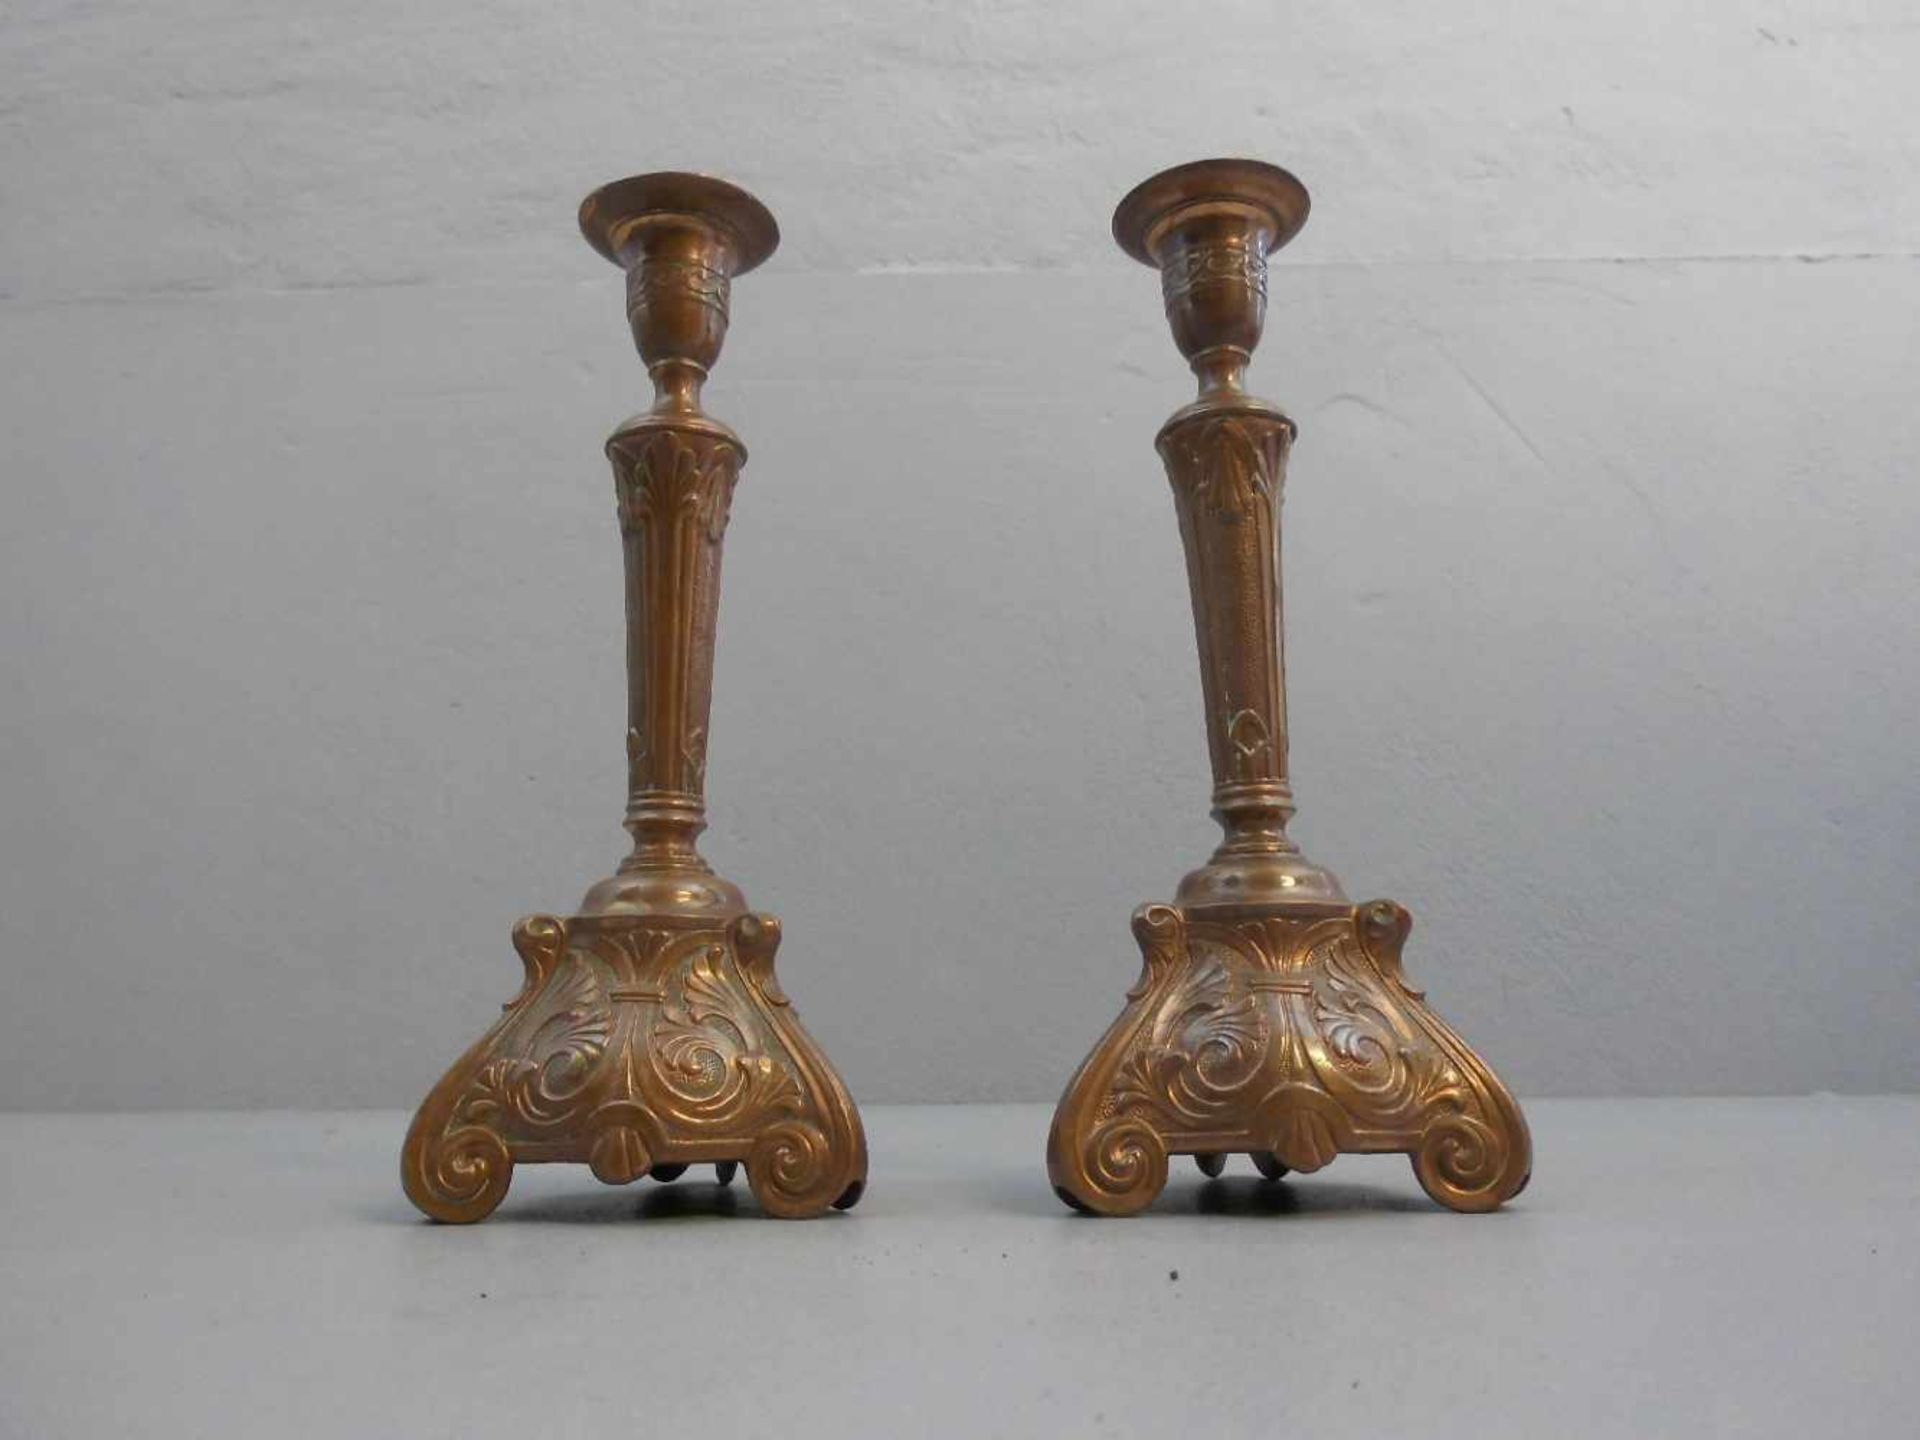 PAAR JUGENDSTIL - LEUCHTER / art nouveau candle stands, kupferfarben bronziertes Metall, um 1900. - Bild 3 aus 3